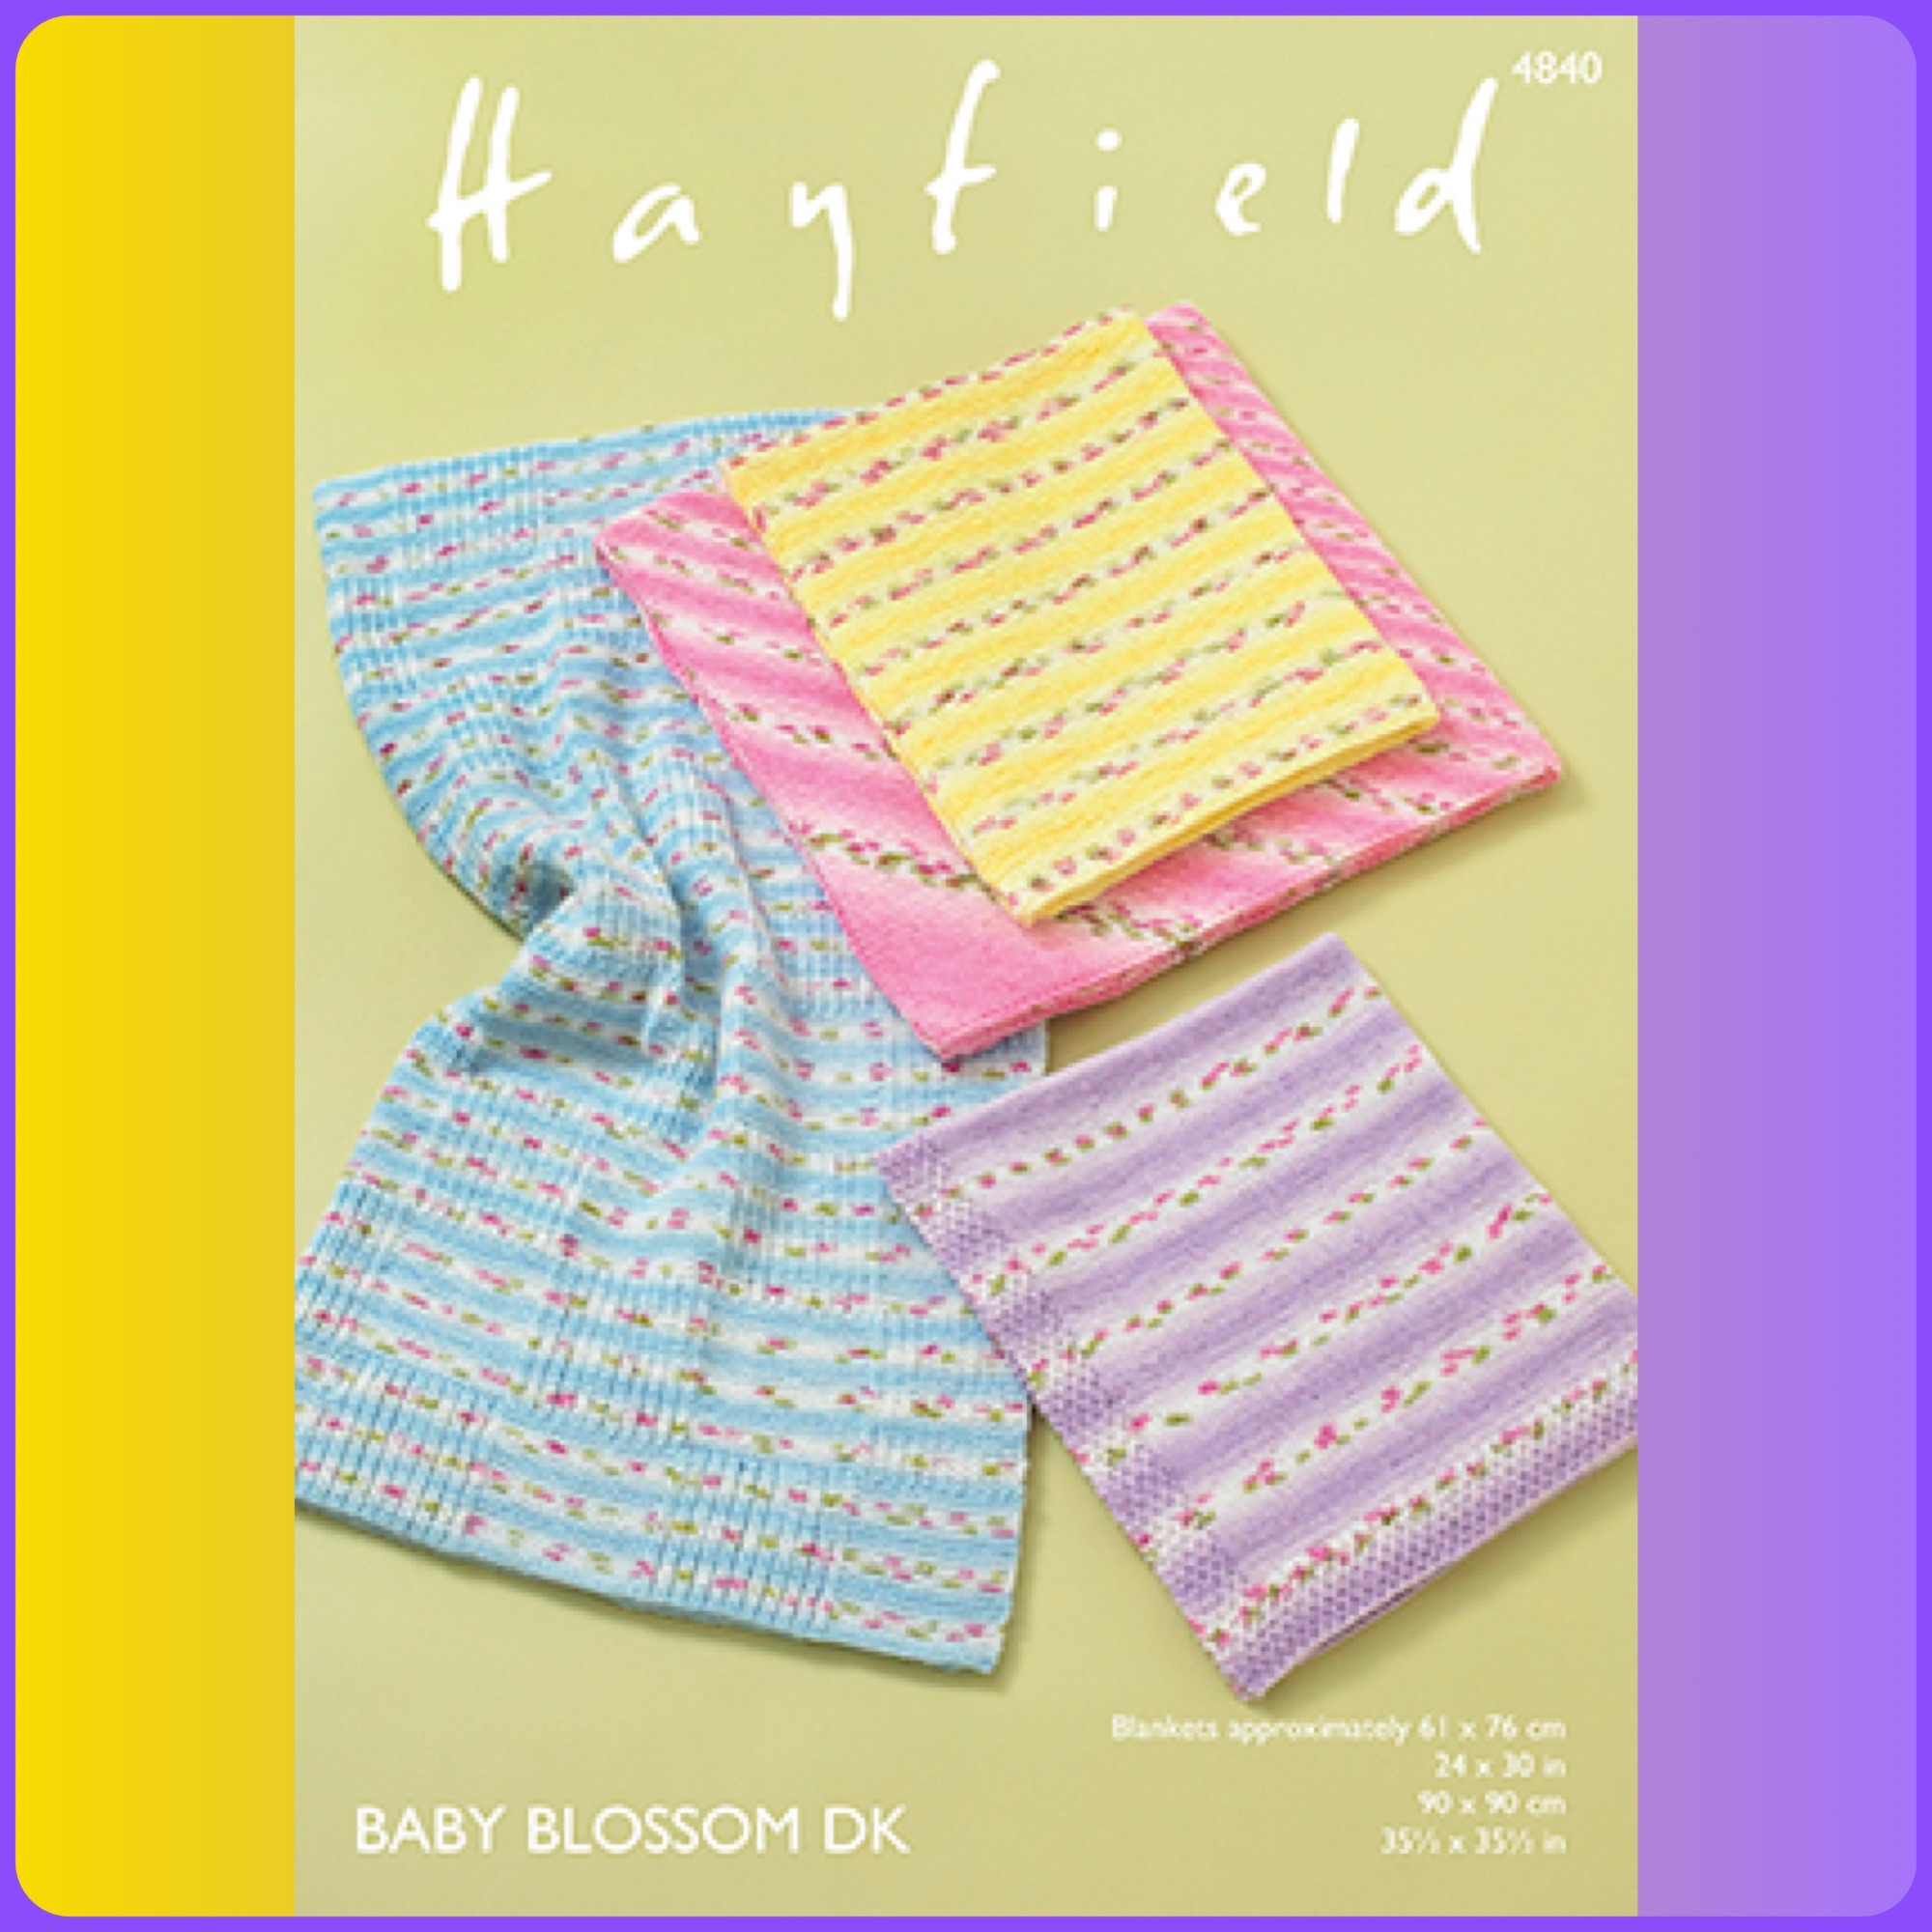 Hayfield baby blossom dk pattern blankets